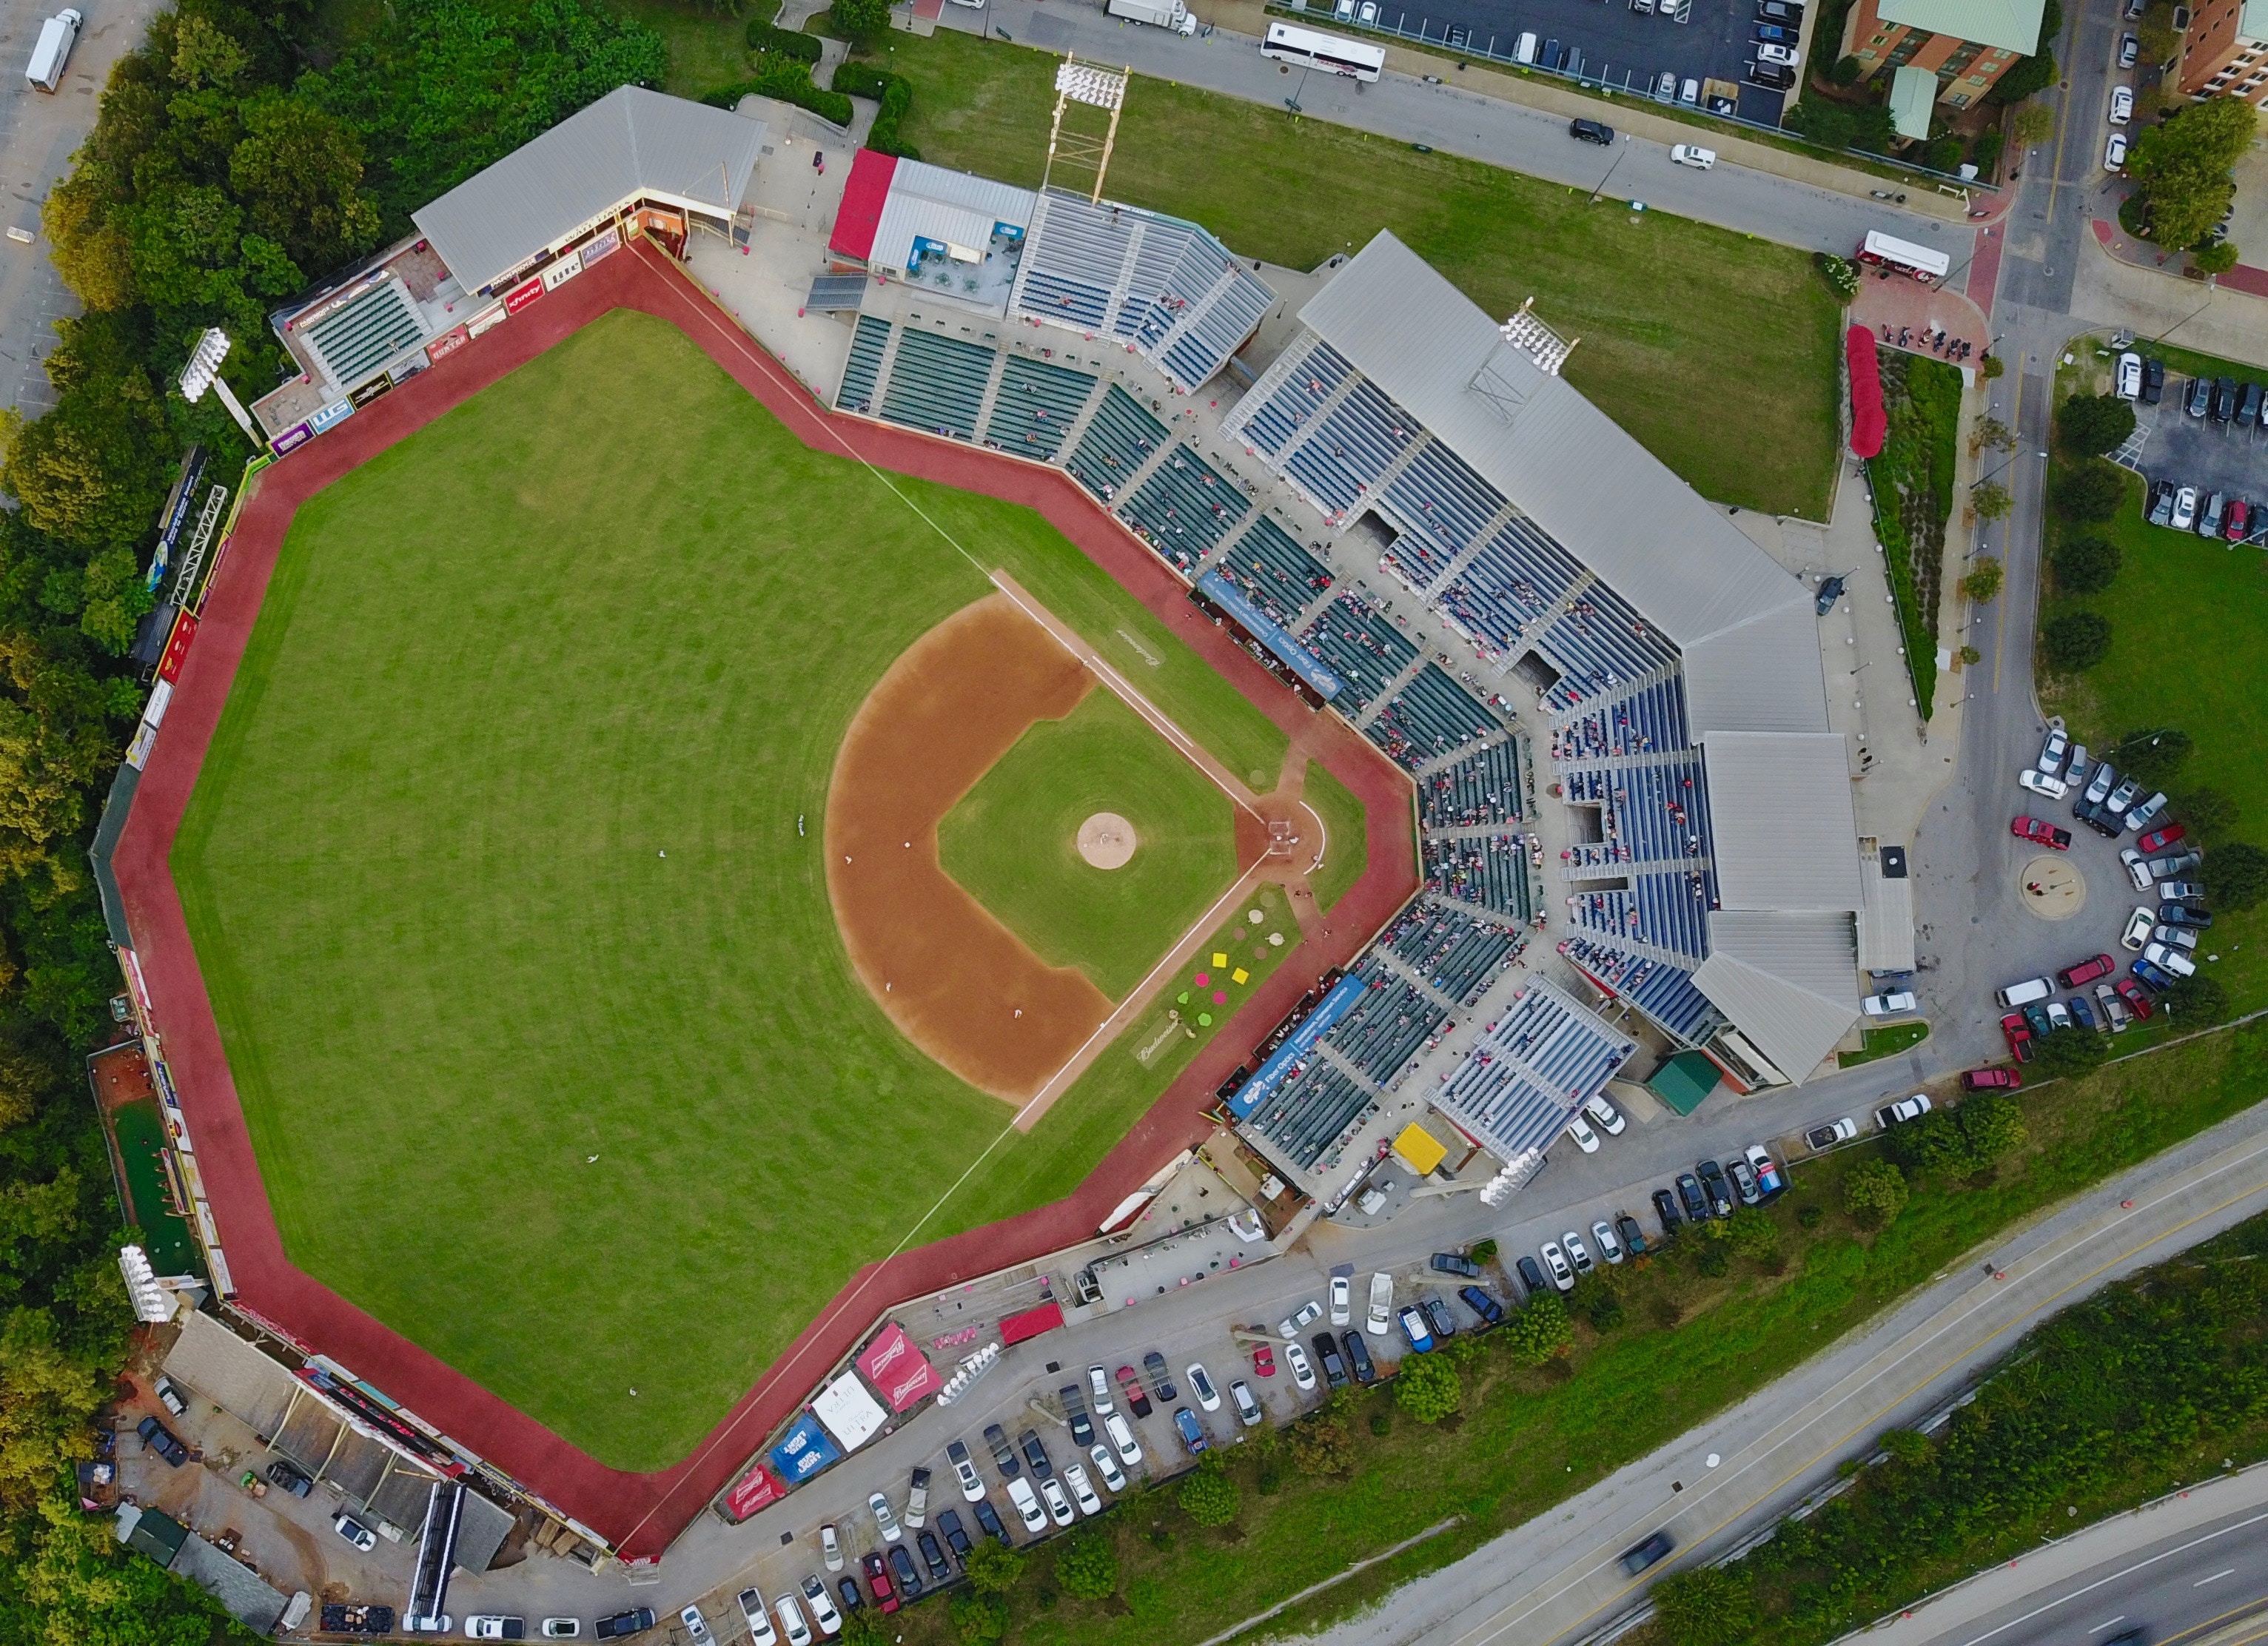 Overhead view of softball field